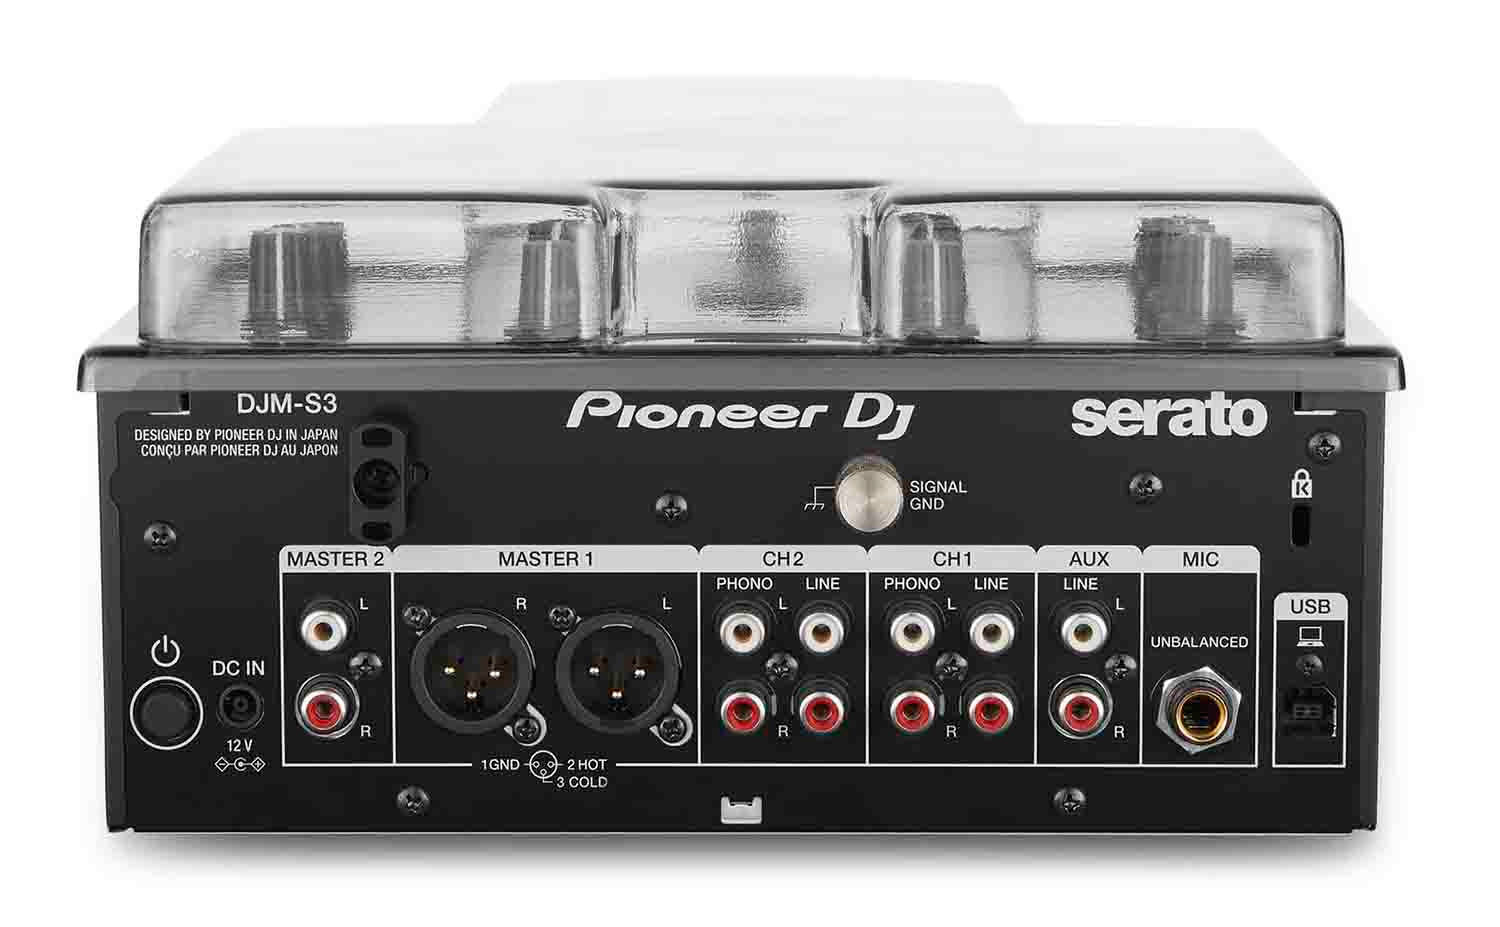 B-Stock: Decksaver Cover DS-PC-DJMS3 For Pioneer DJM-S3 DJ Mixer - Hollywood DJ